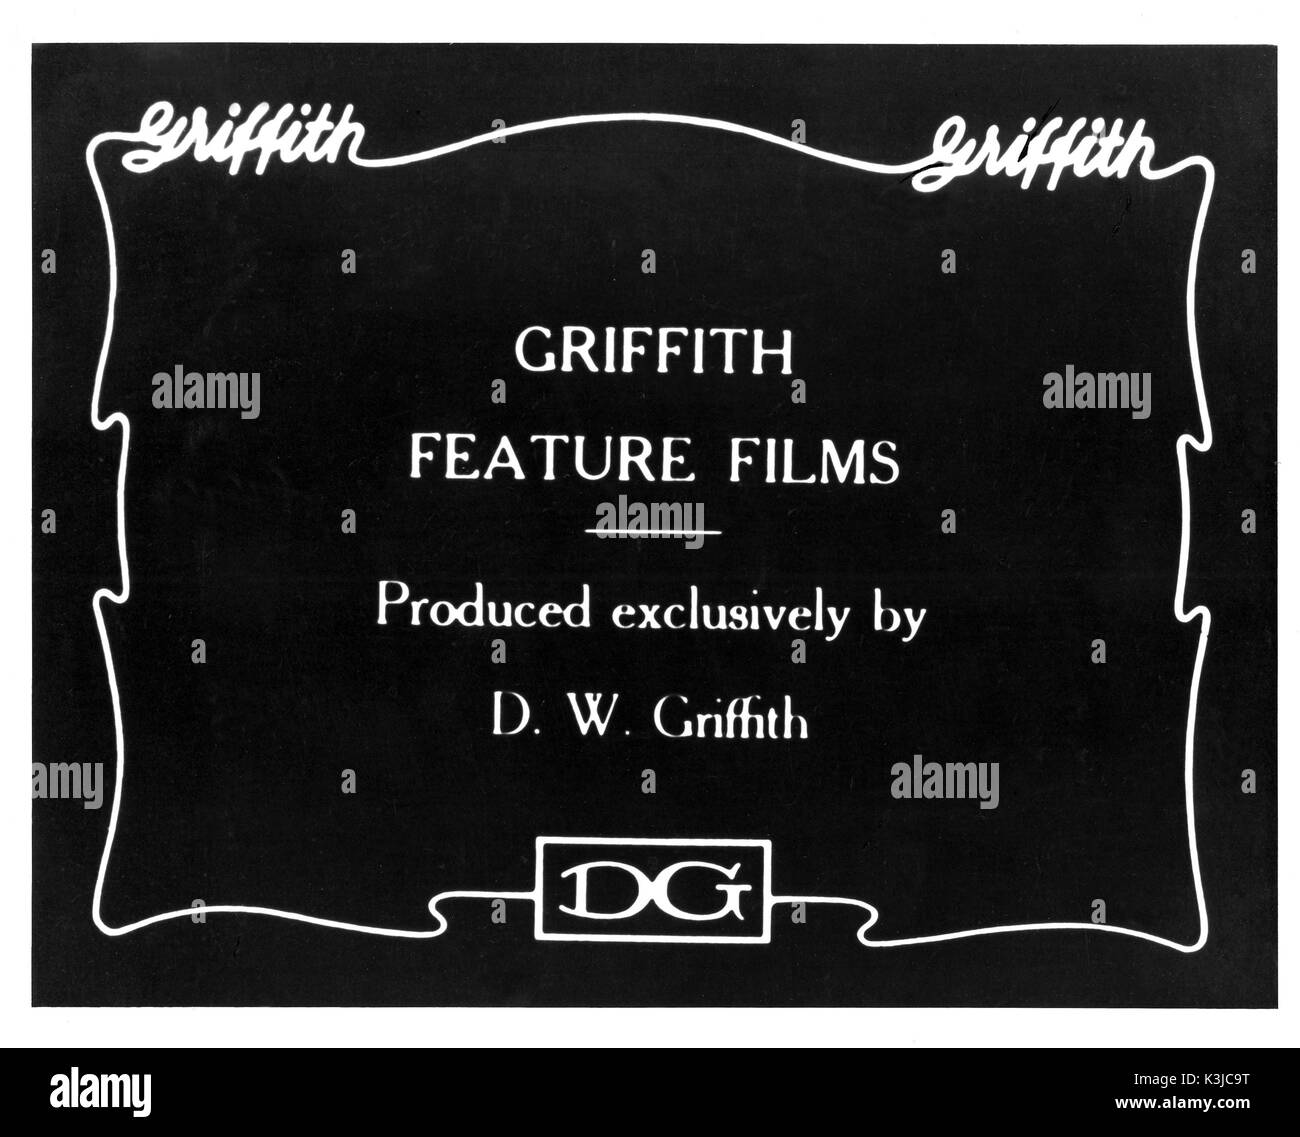 D.W. GRIFFITH FEATURE FILMS LOGO Stock Photo